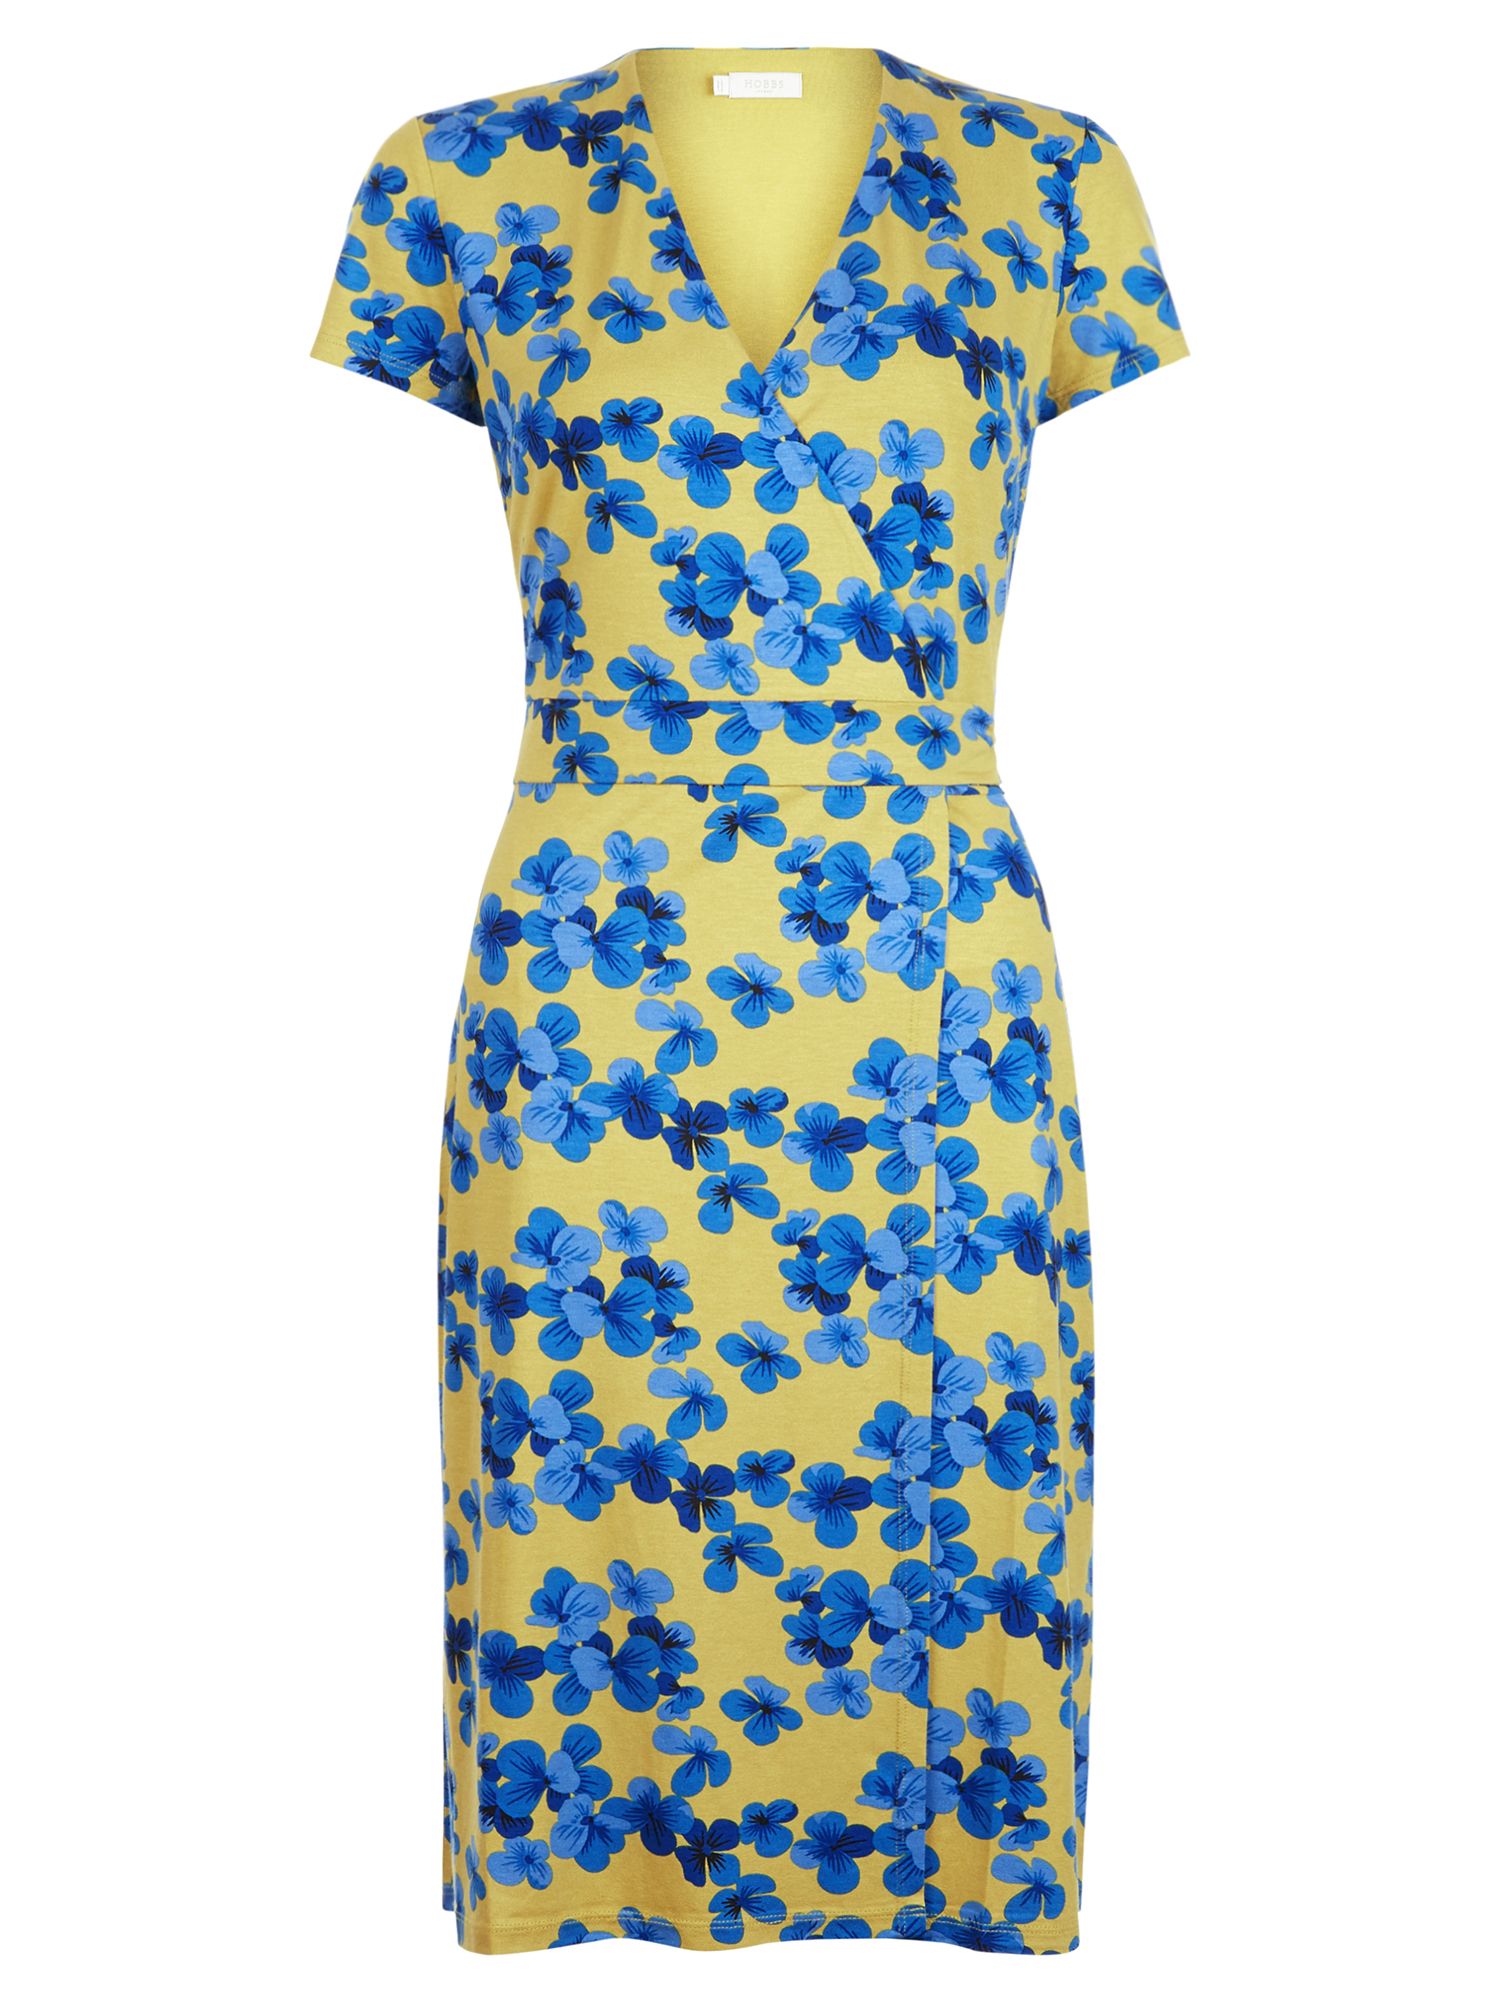 Hobbs Sally Hydrangea Print Dress, Multi